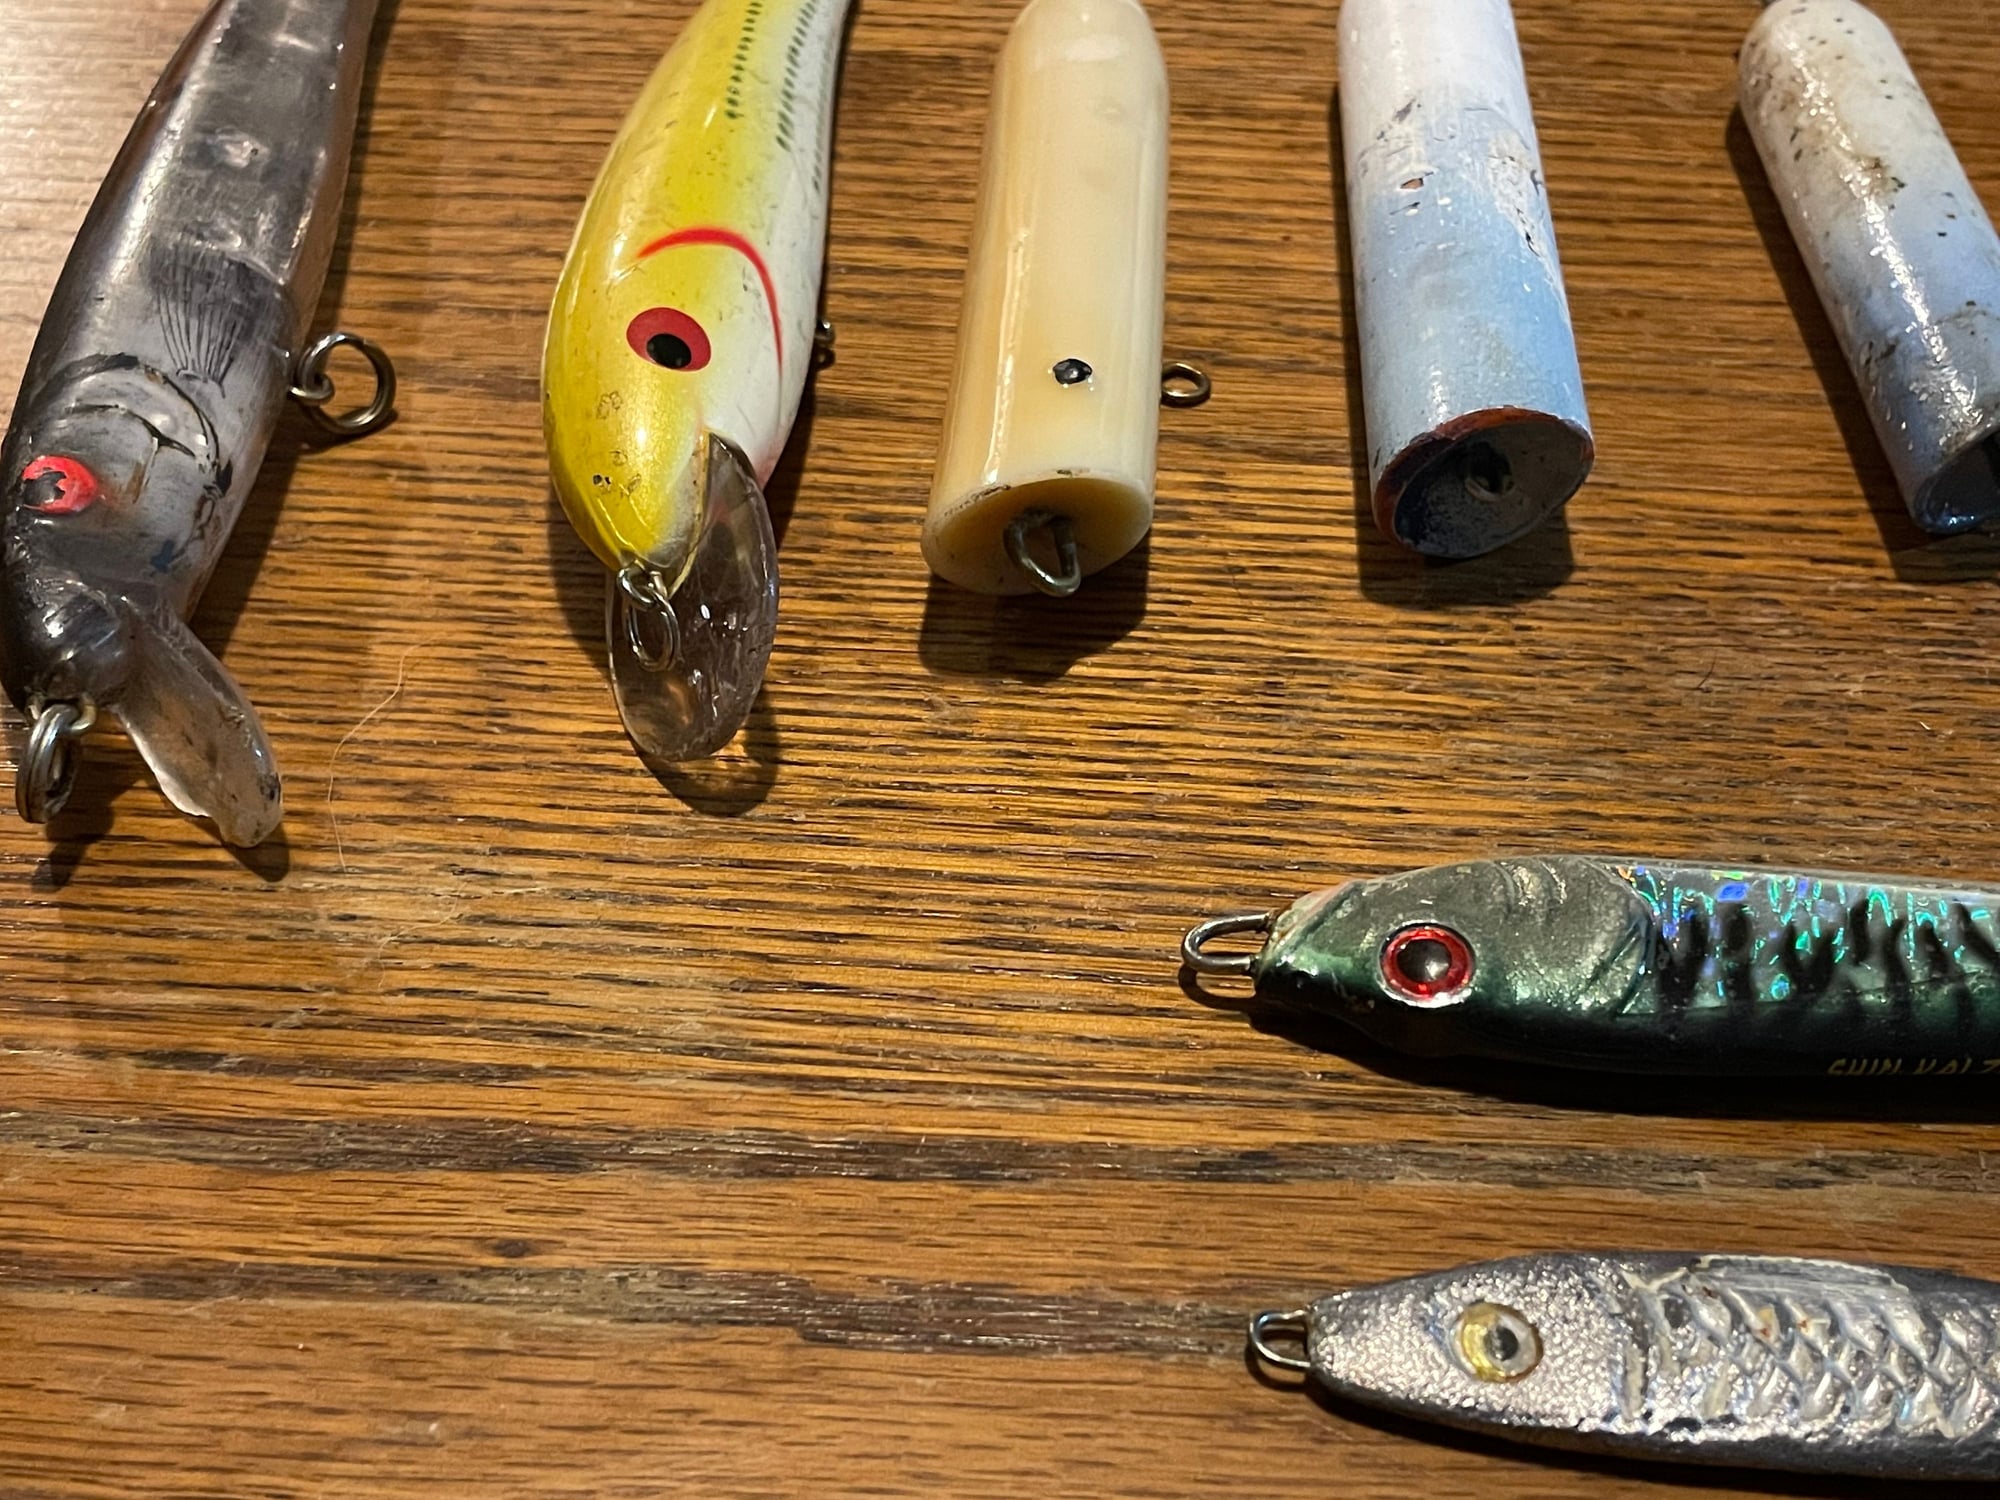 Lot of 8 saltwater fishing lures - Poppers, swim plugs, metal jigs